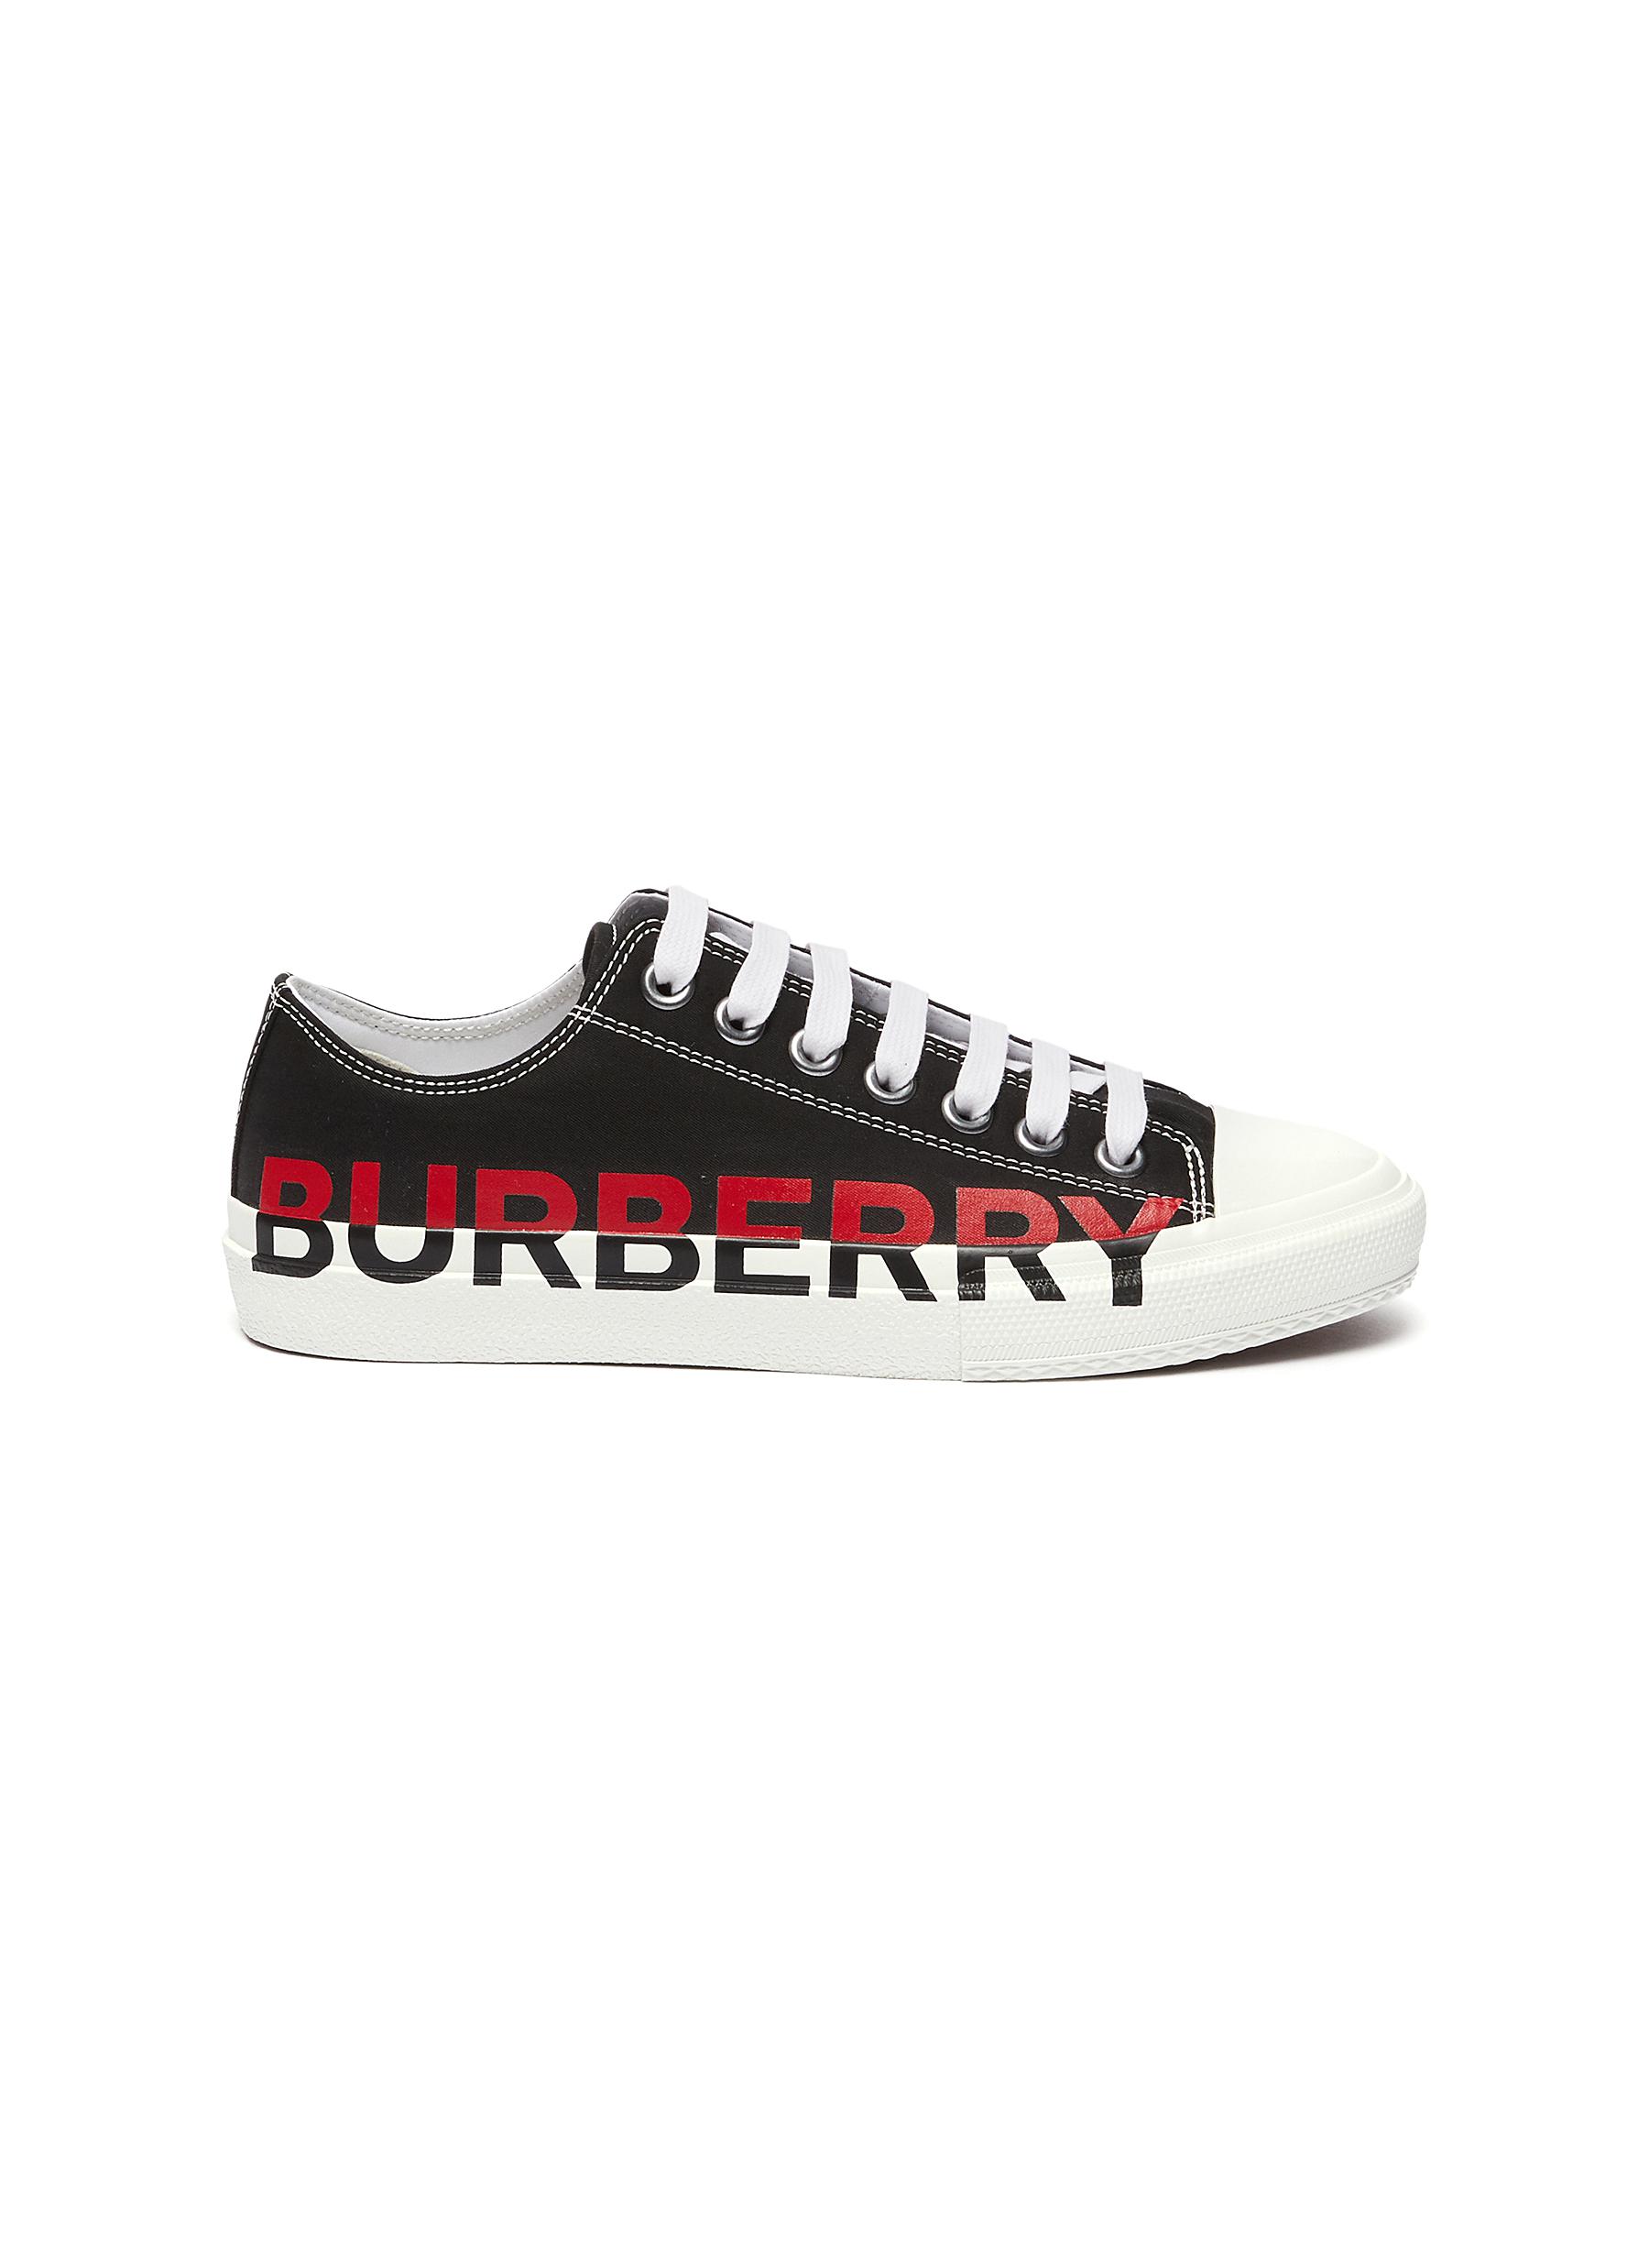 burberry low top sneakers